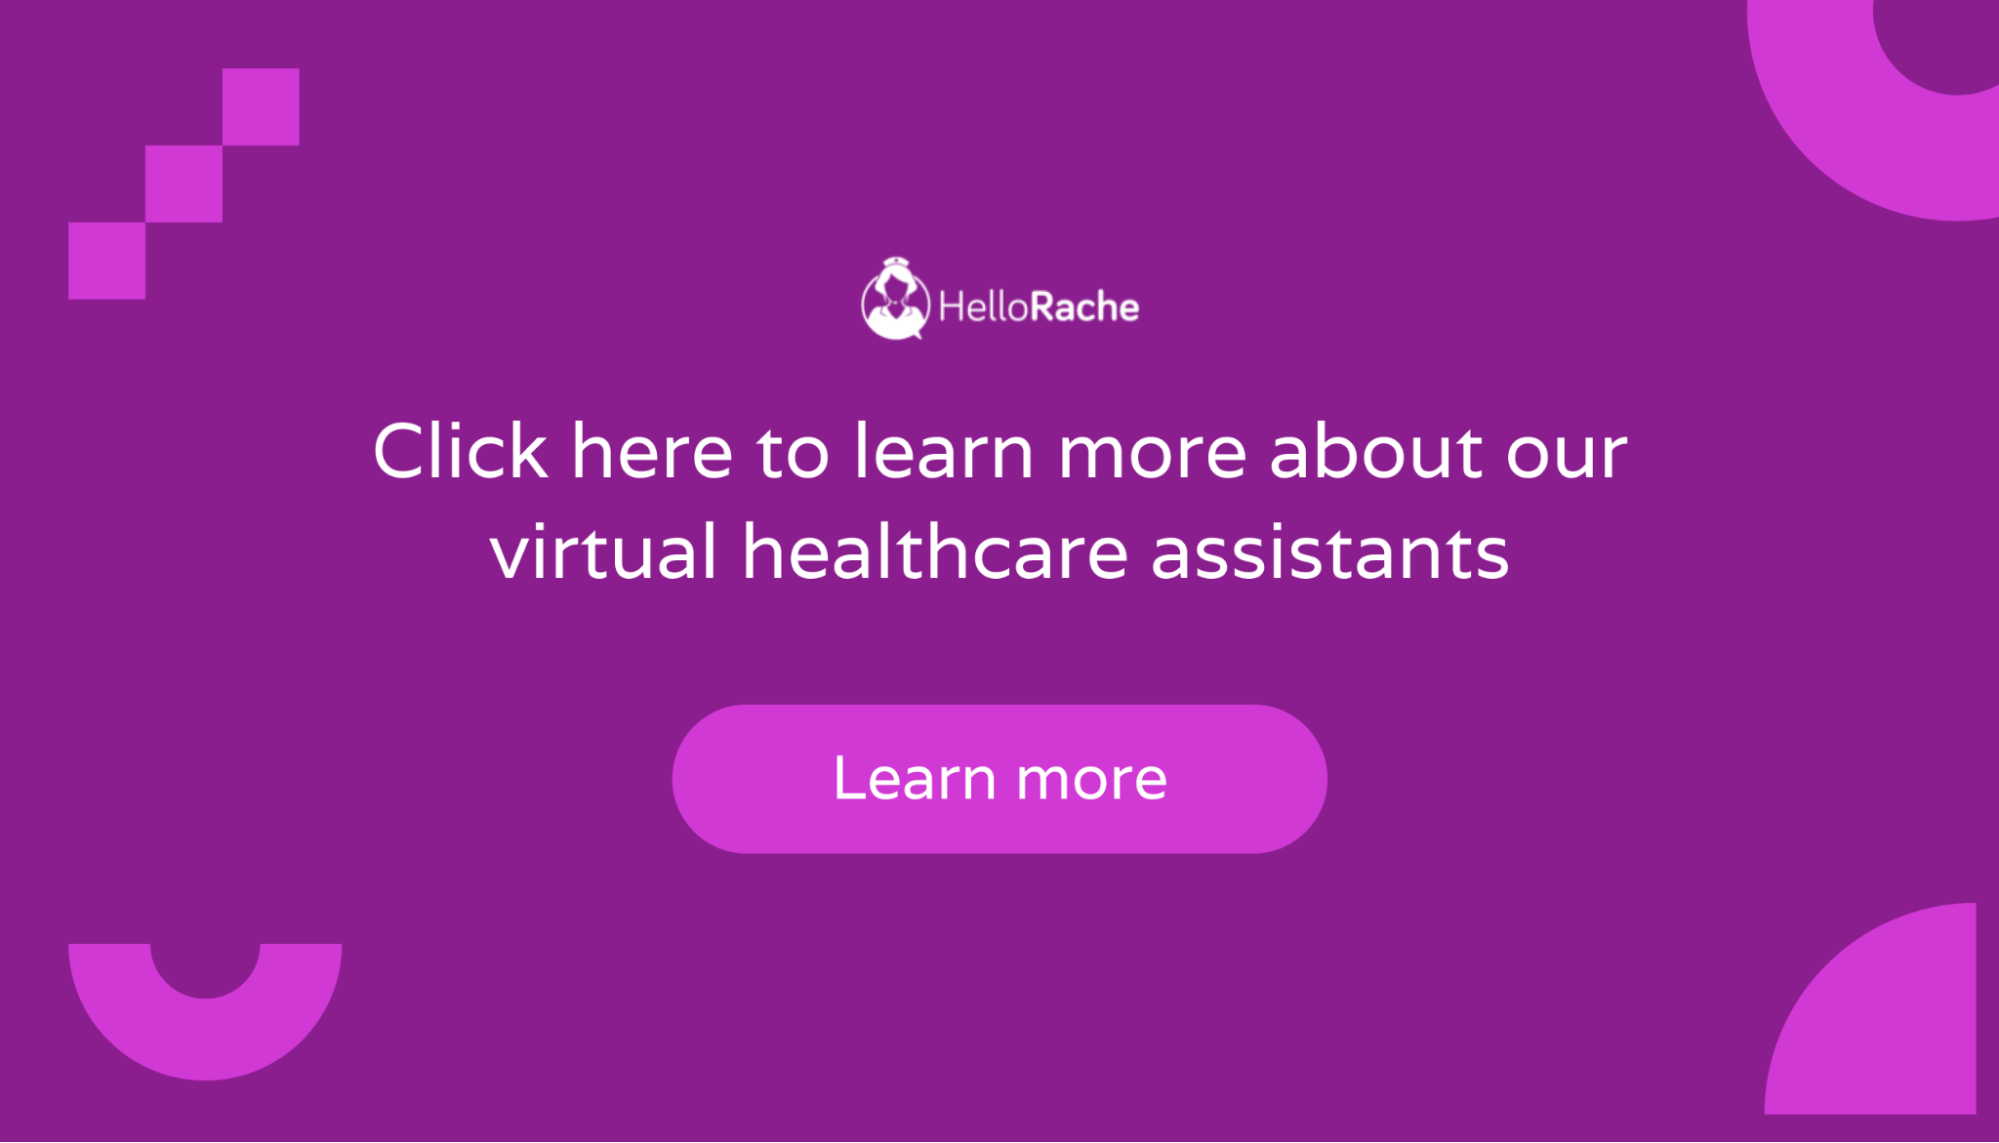 HelloRache virtual healthcare assistants 